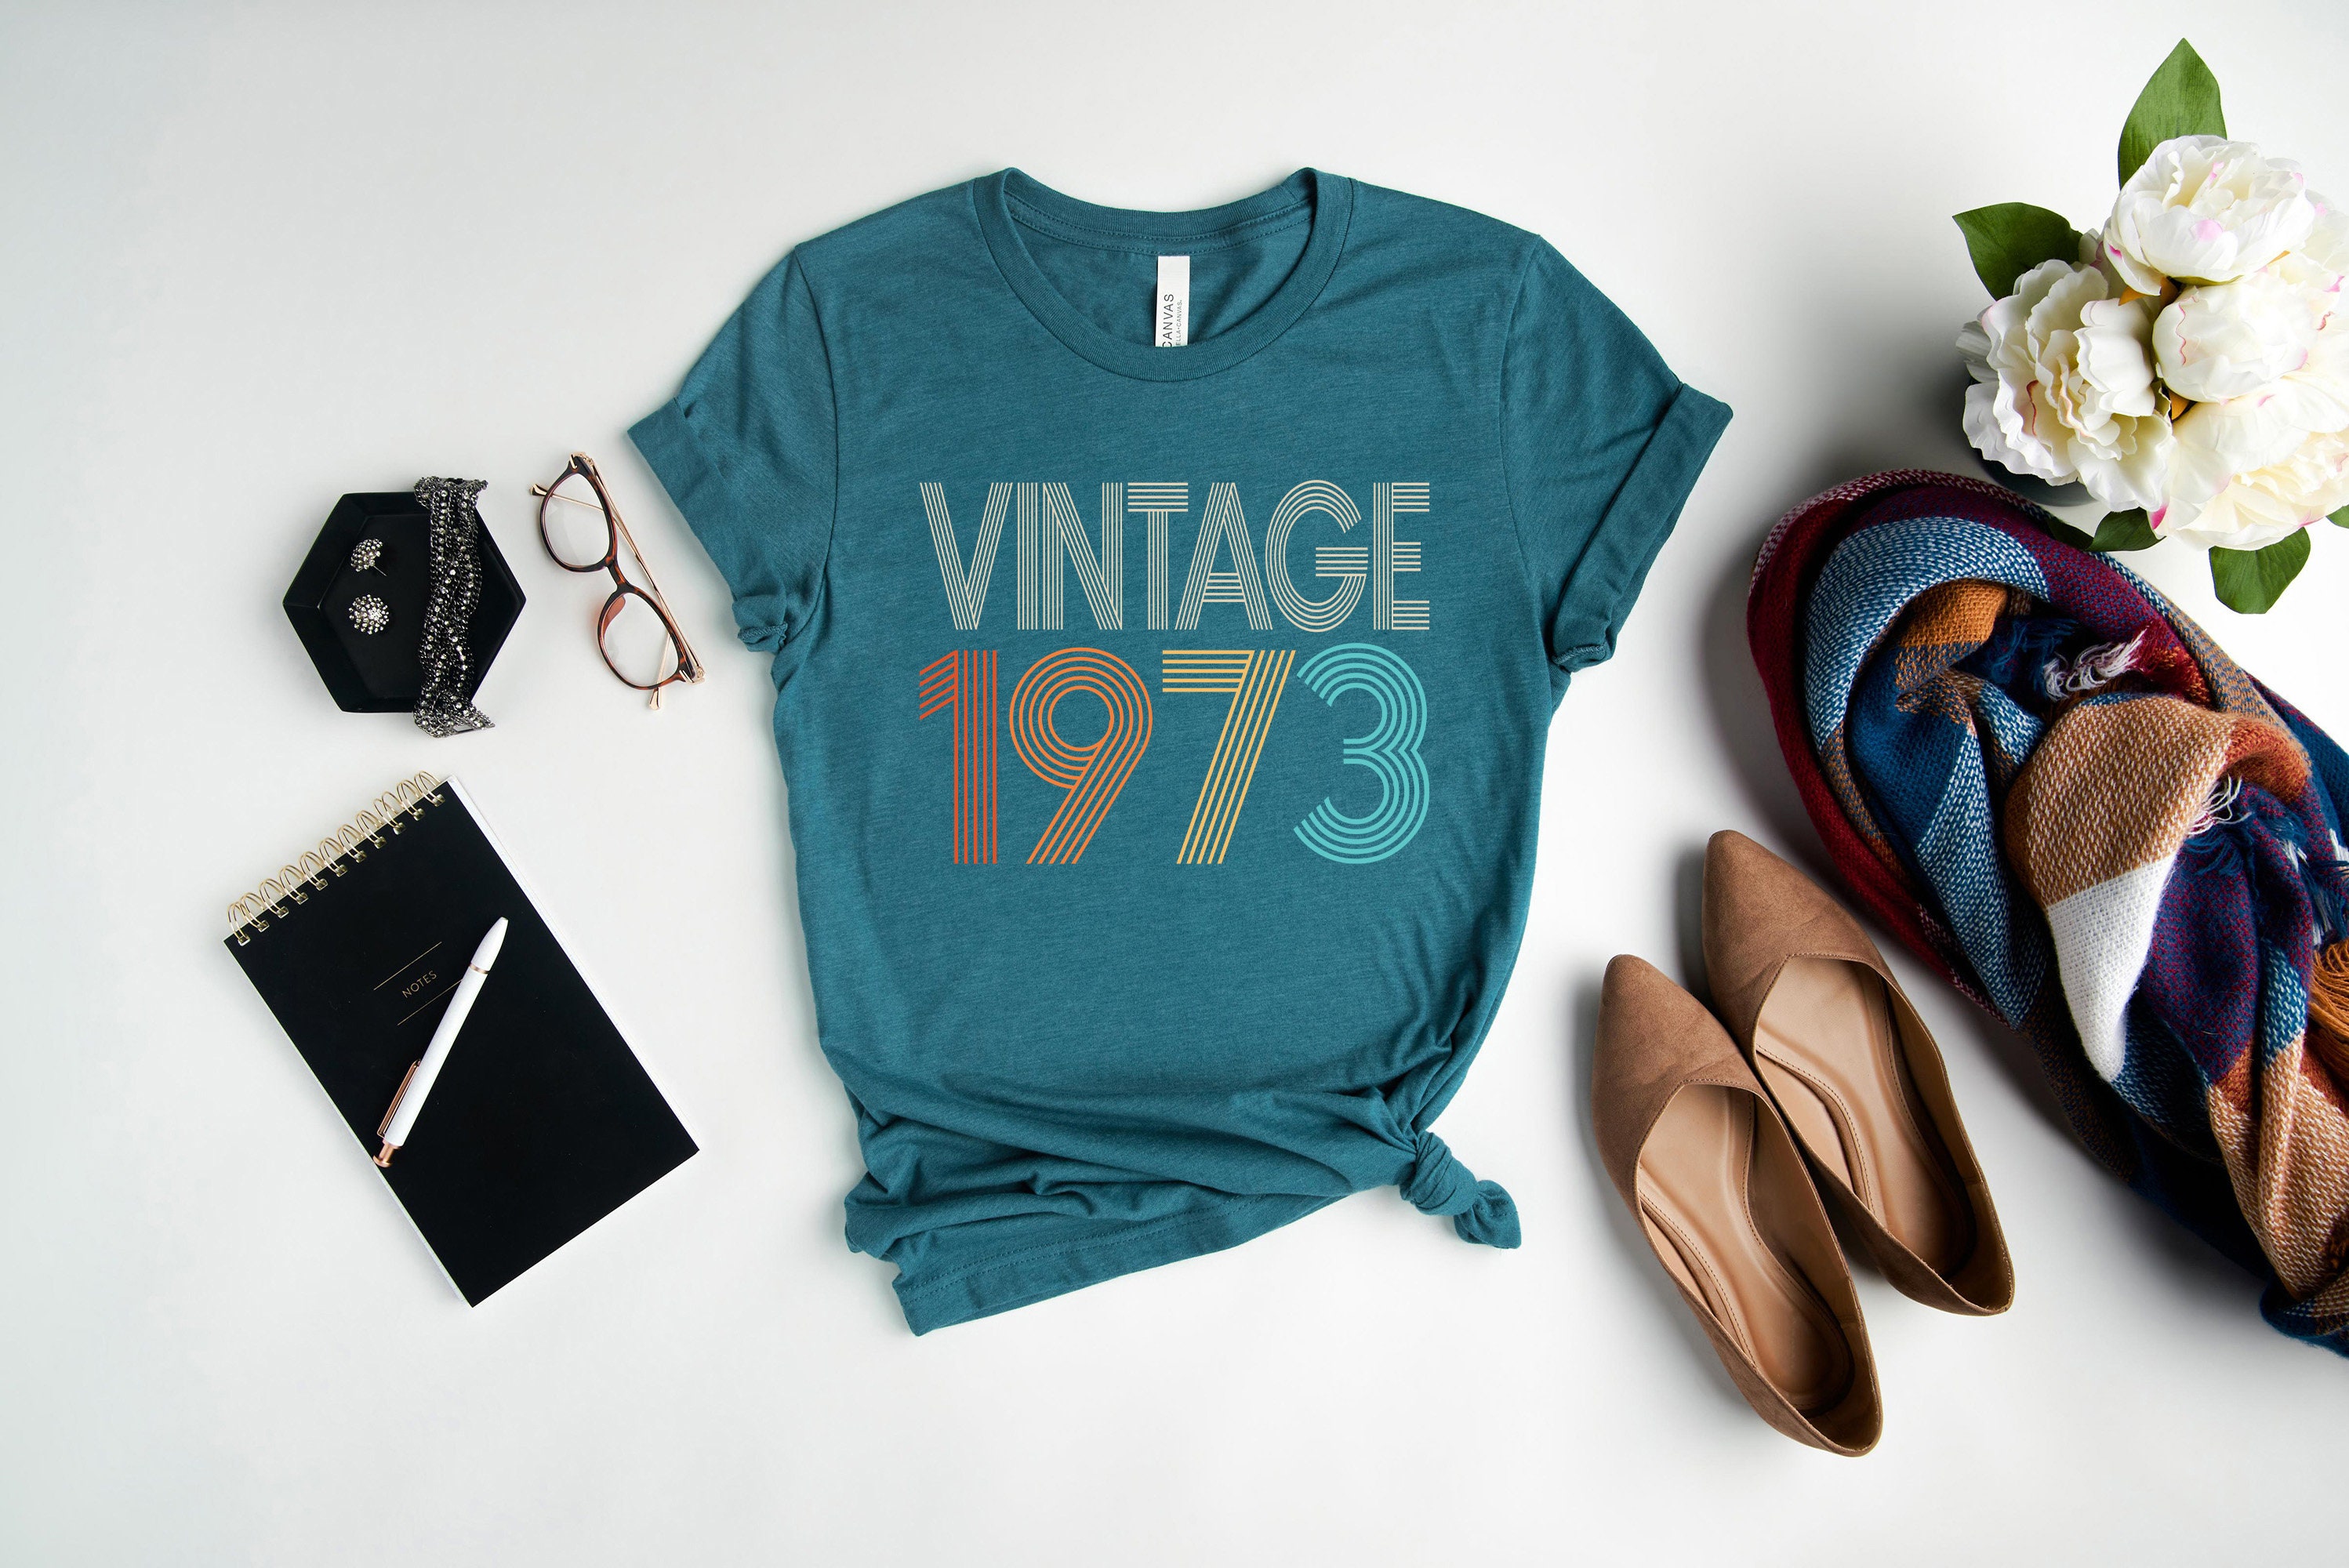 Discover 50th Birthday T-Shirt, Vintage 1973 Shirt, 50th Birthday Gift T-Shirt